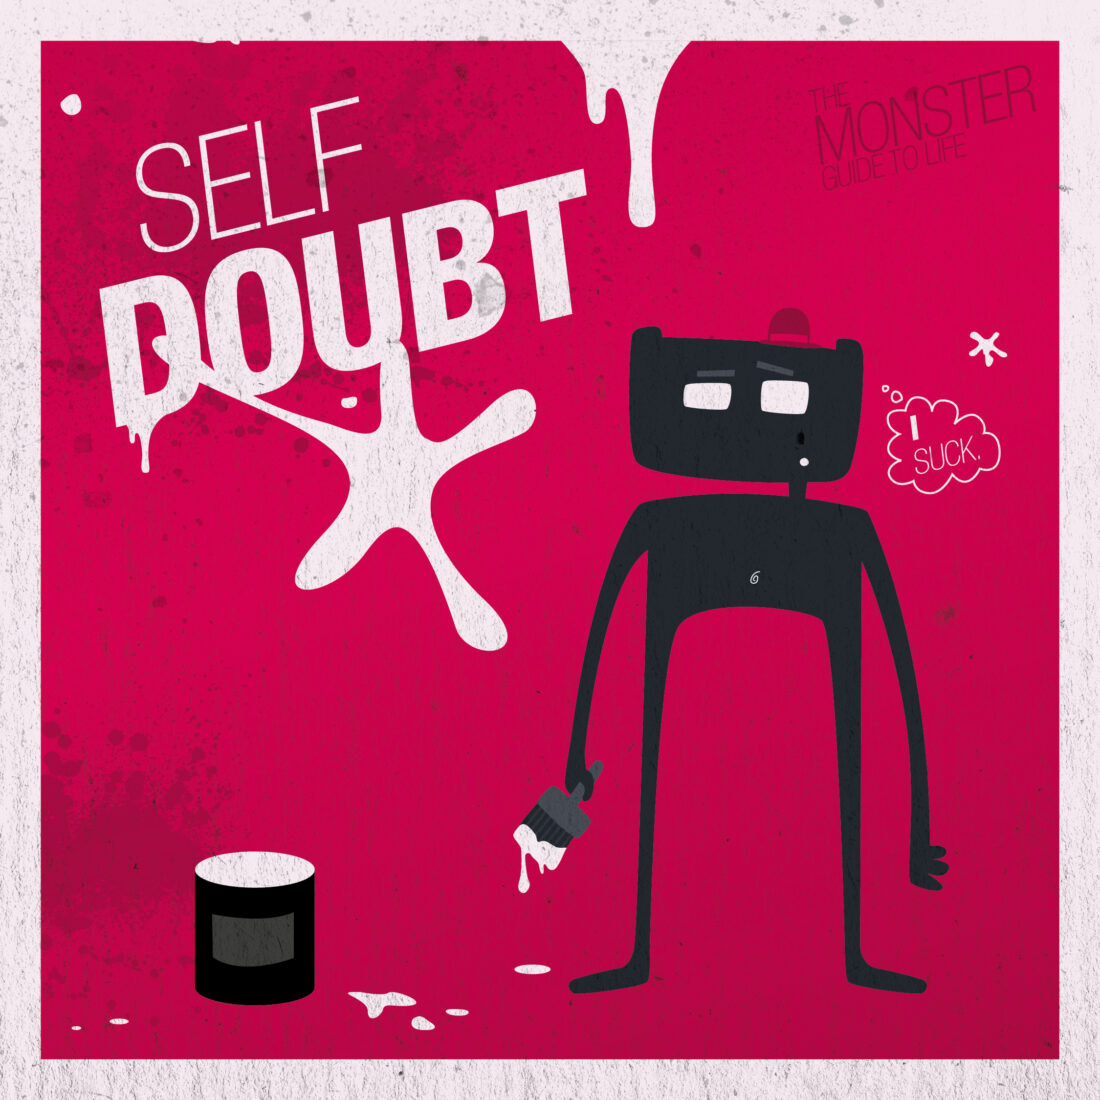 Self-doubt illustration